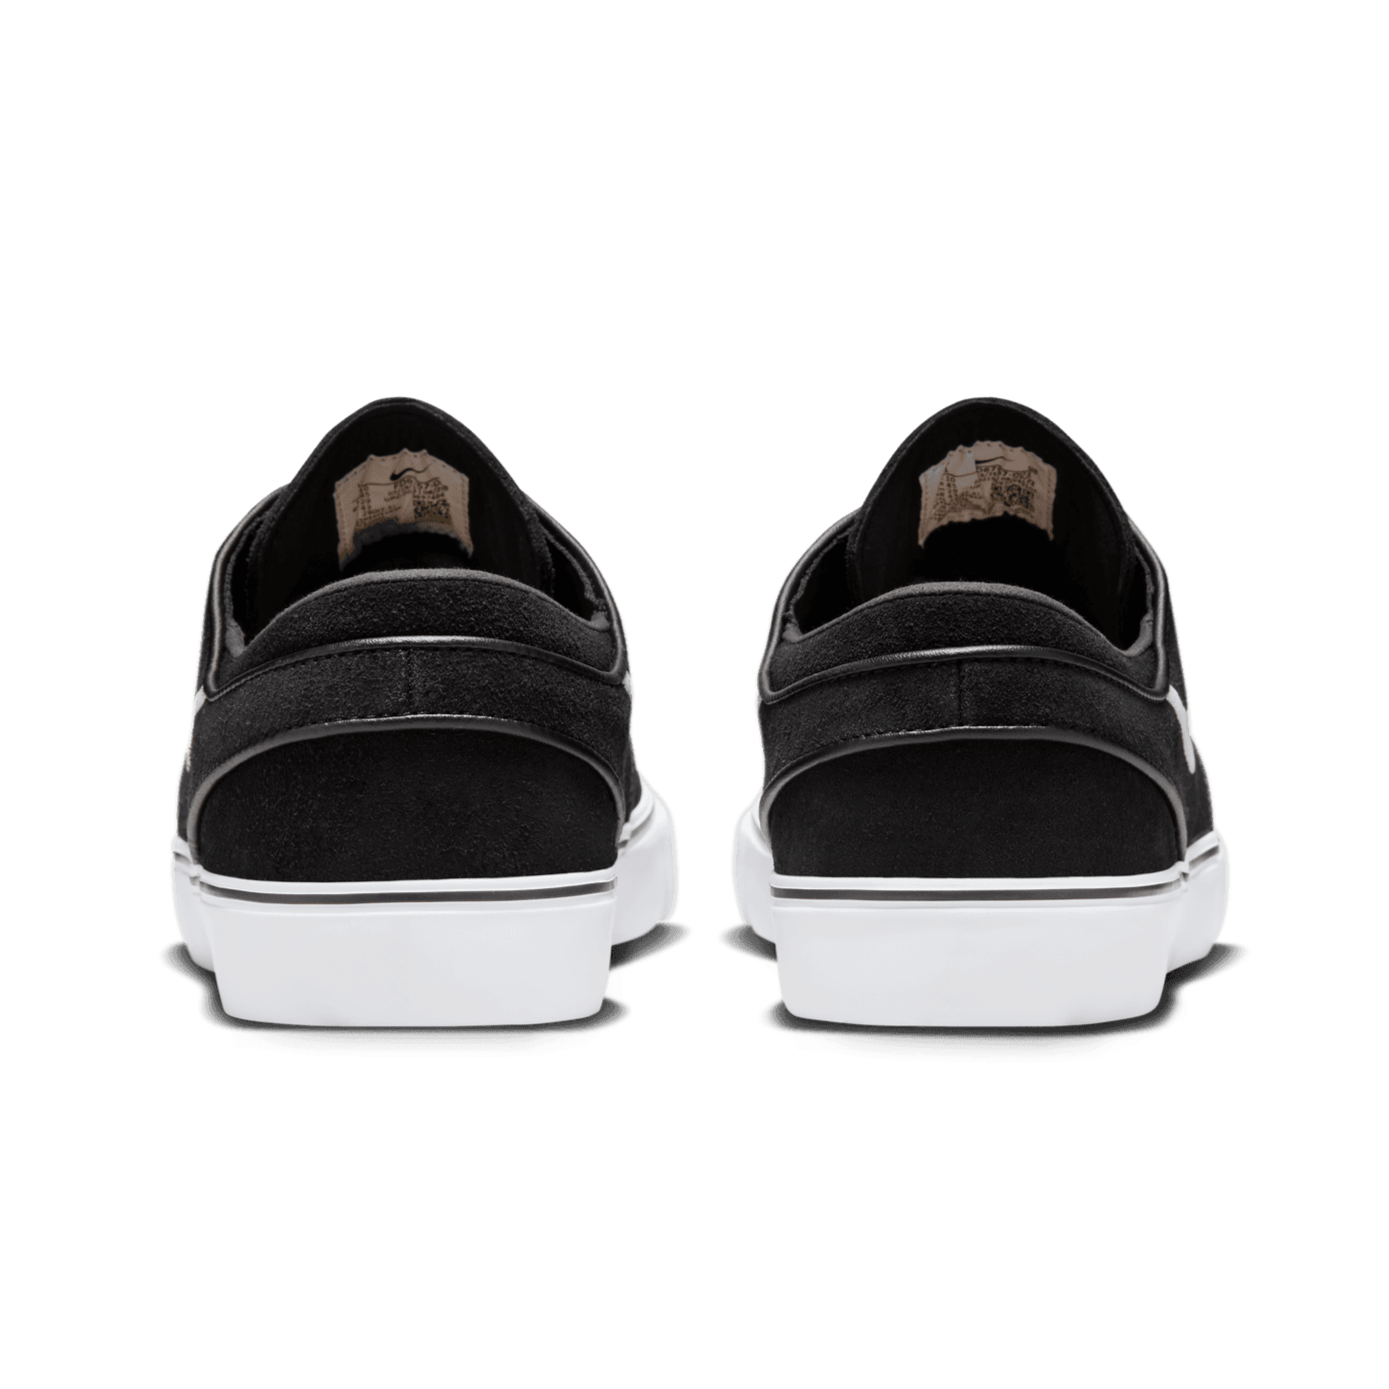 Black/White Janoski OG+ Nike SB Skate Shoe Back